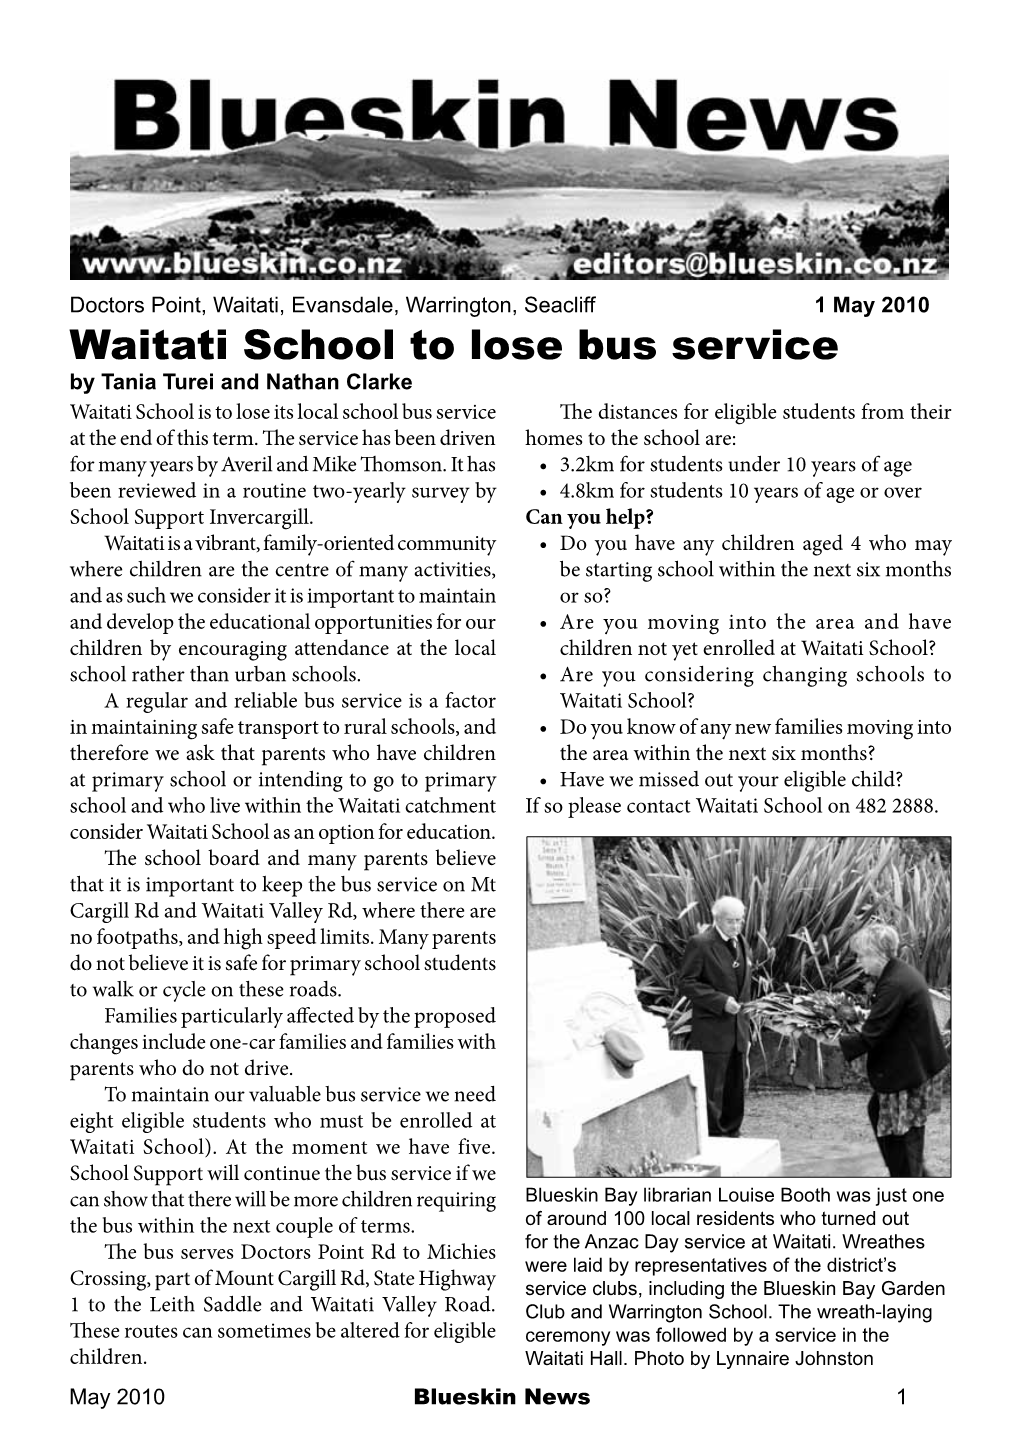 Waitati School to Lose Bus Service